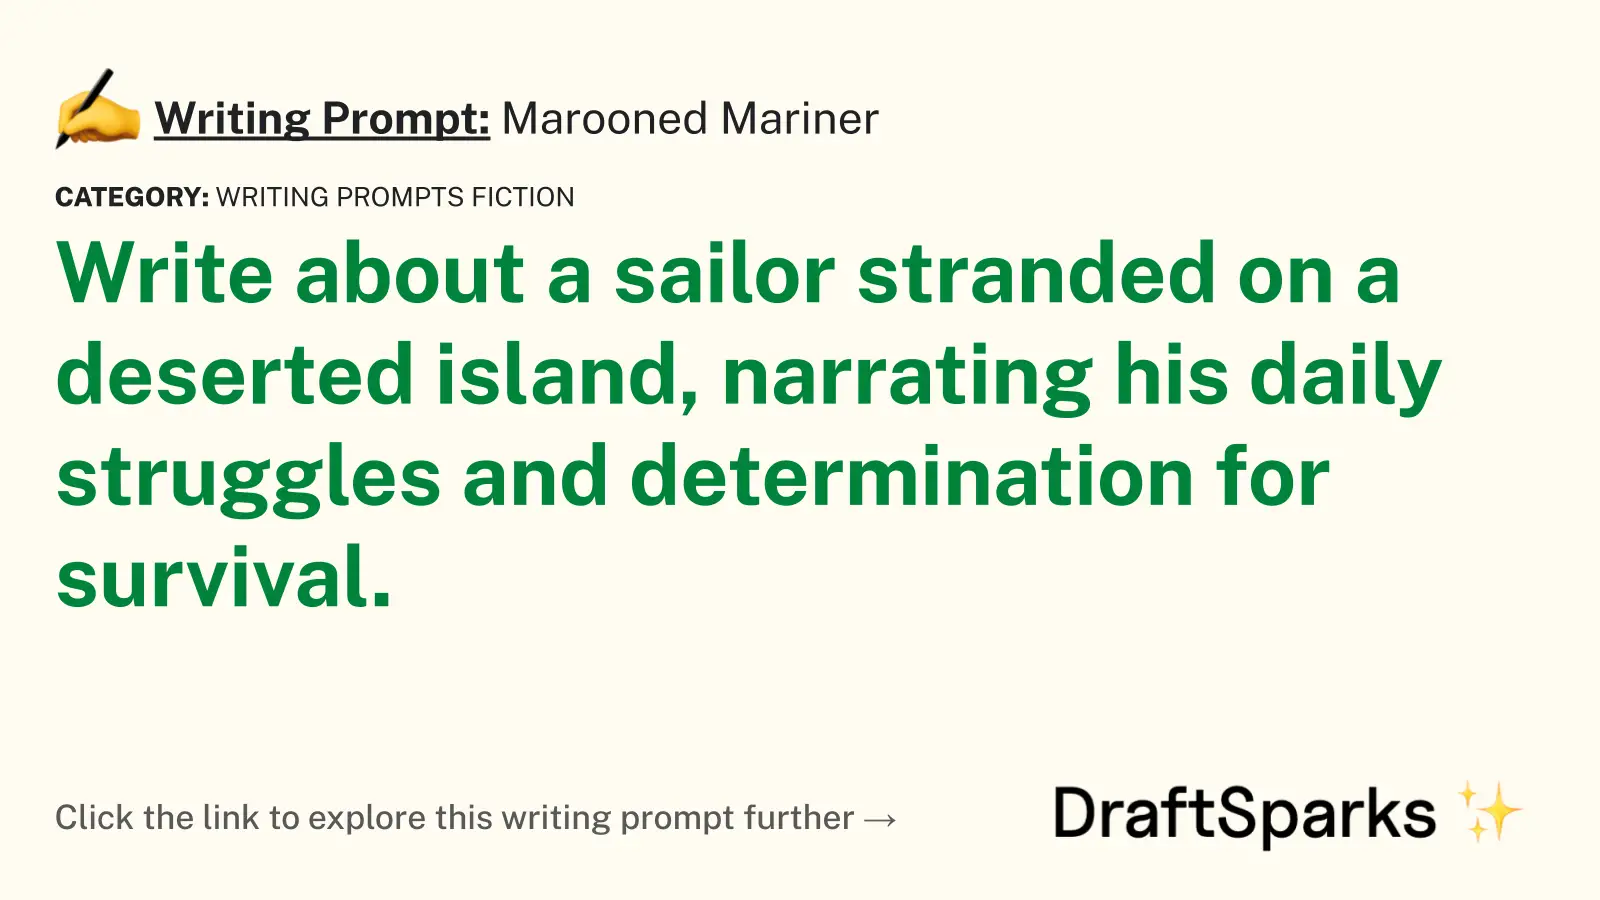 Marooned Mariner